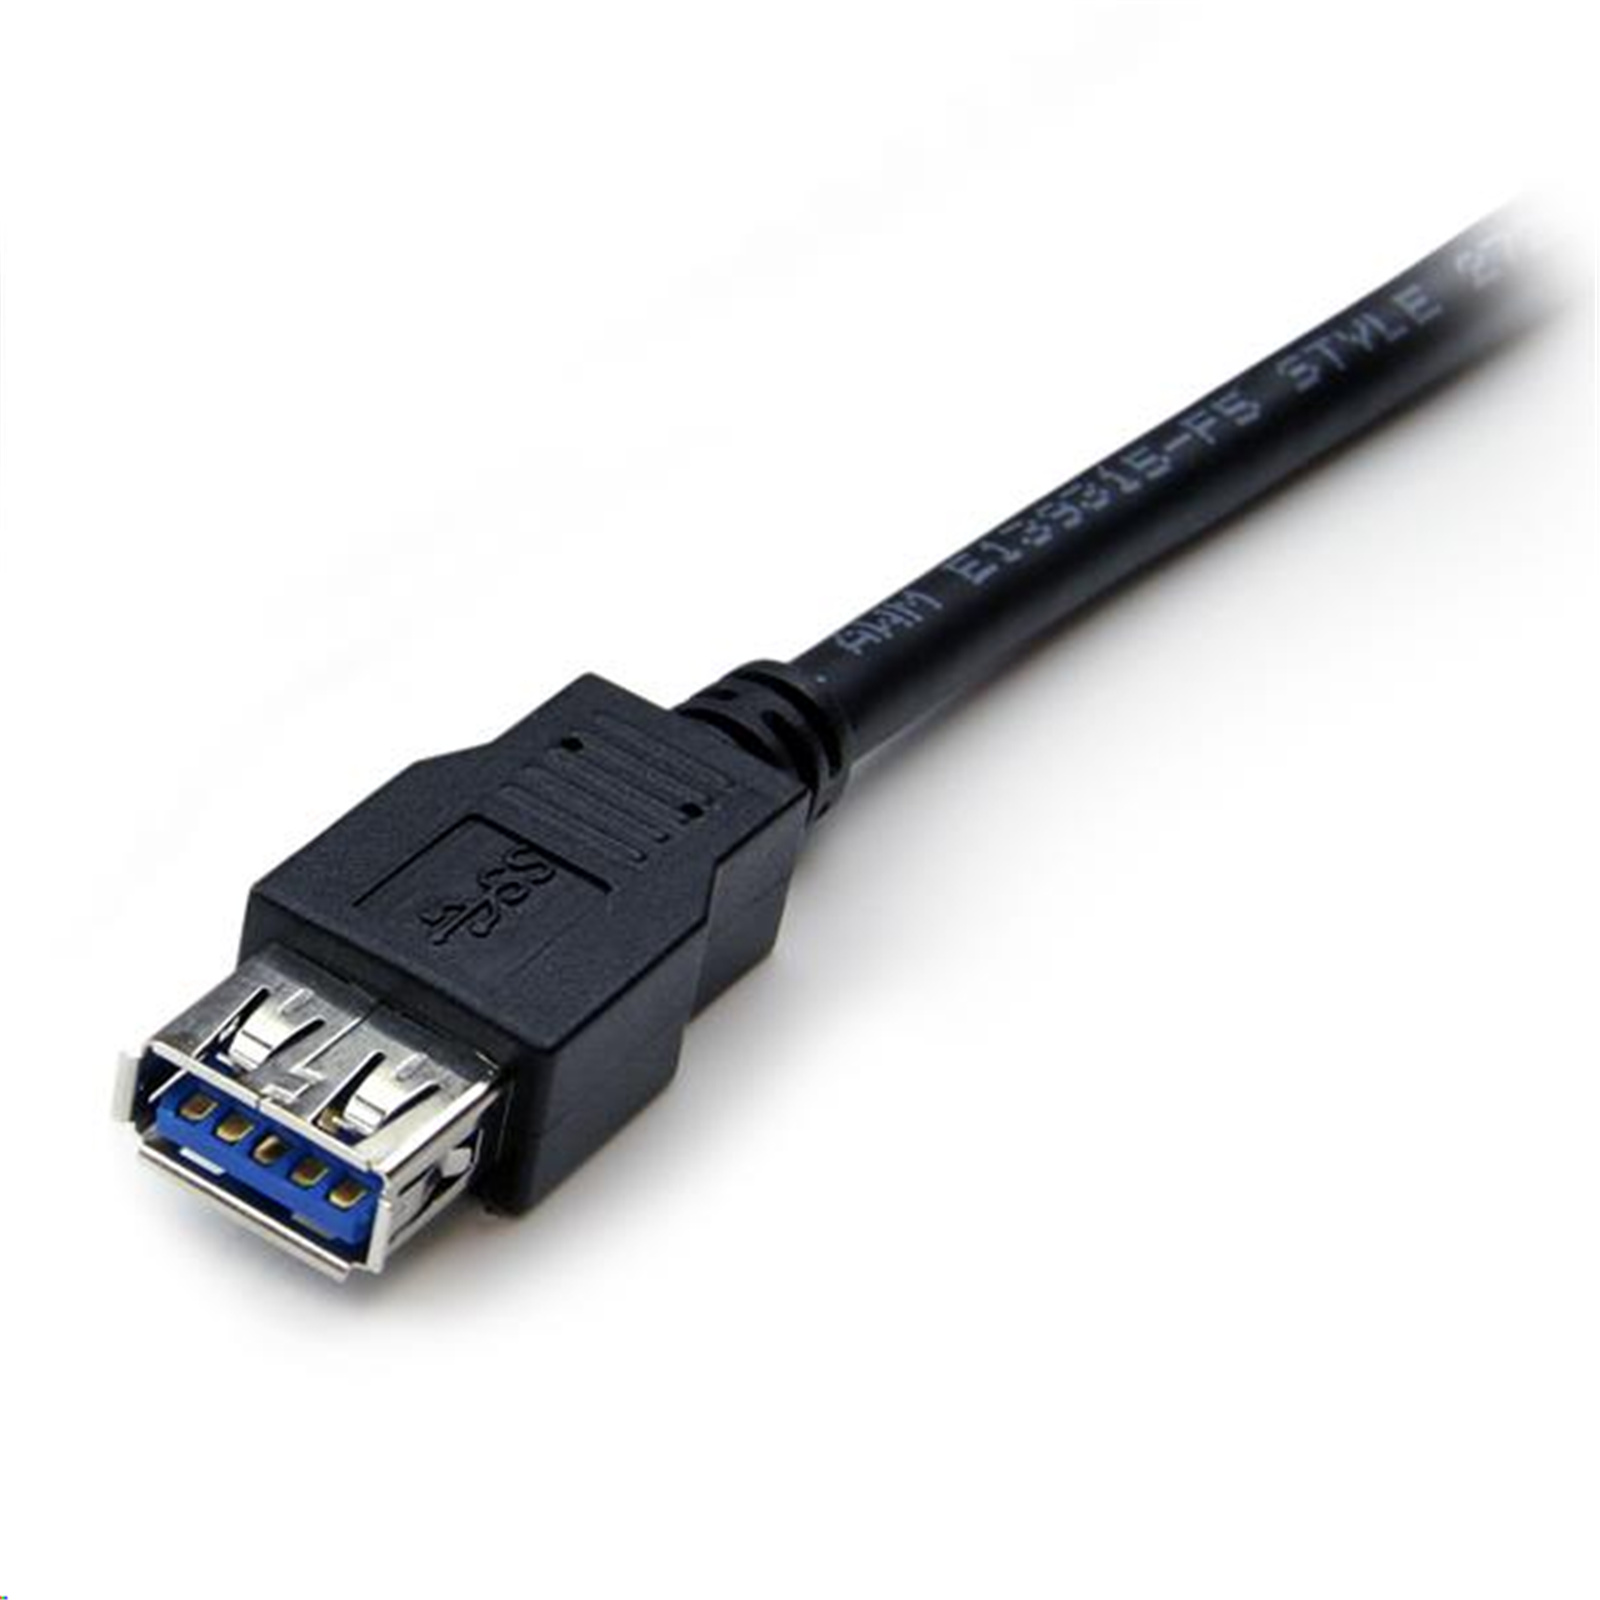 USB 3.2 Gen 1 Type a кабель. Разъем USB 3.0 male. Кабель USB 3.0 SUPERSPEED USB 3.0 19 Pin. Шнуры USB 3.0 female. Usb 3.0 кабель питанием